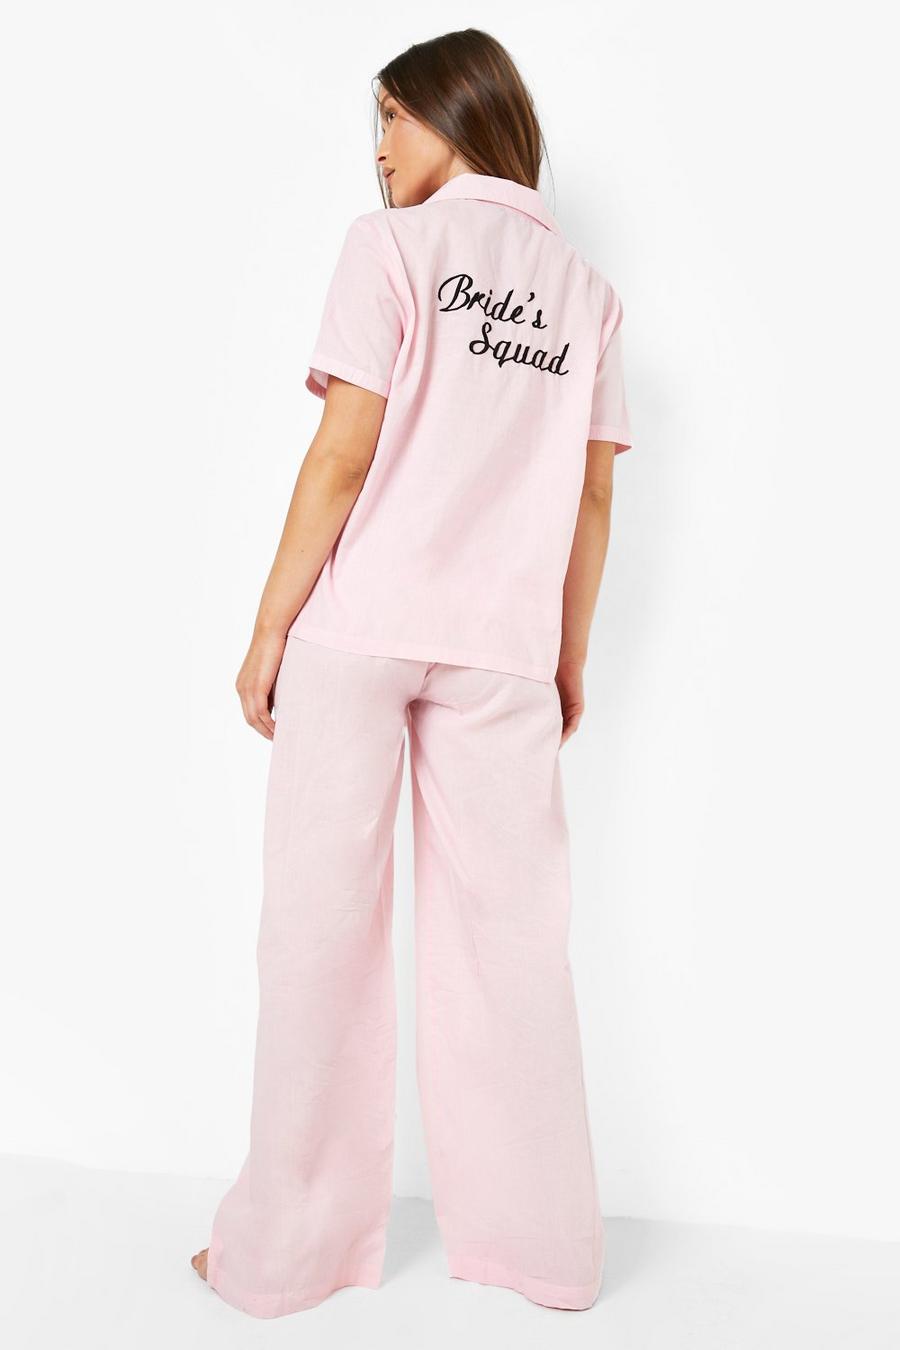 Blush pink Cotton Bride's Squad Embroidery Trouser Set 